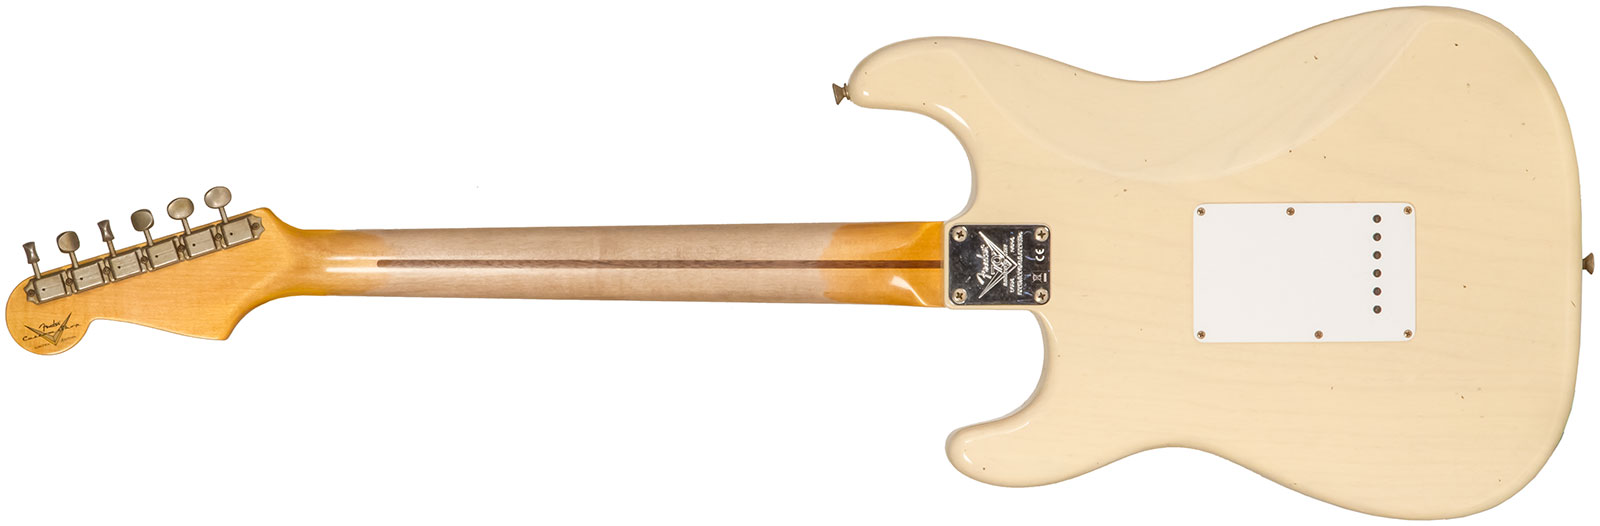 Fender Custom Shop Strat 1954 70th Anniv. 3s Trem Mn #xn4159 - Journeyman Relic Vintage Blonde - E-Gitarre in Str-Form - Variation 1